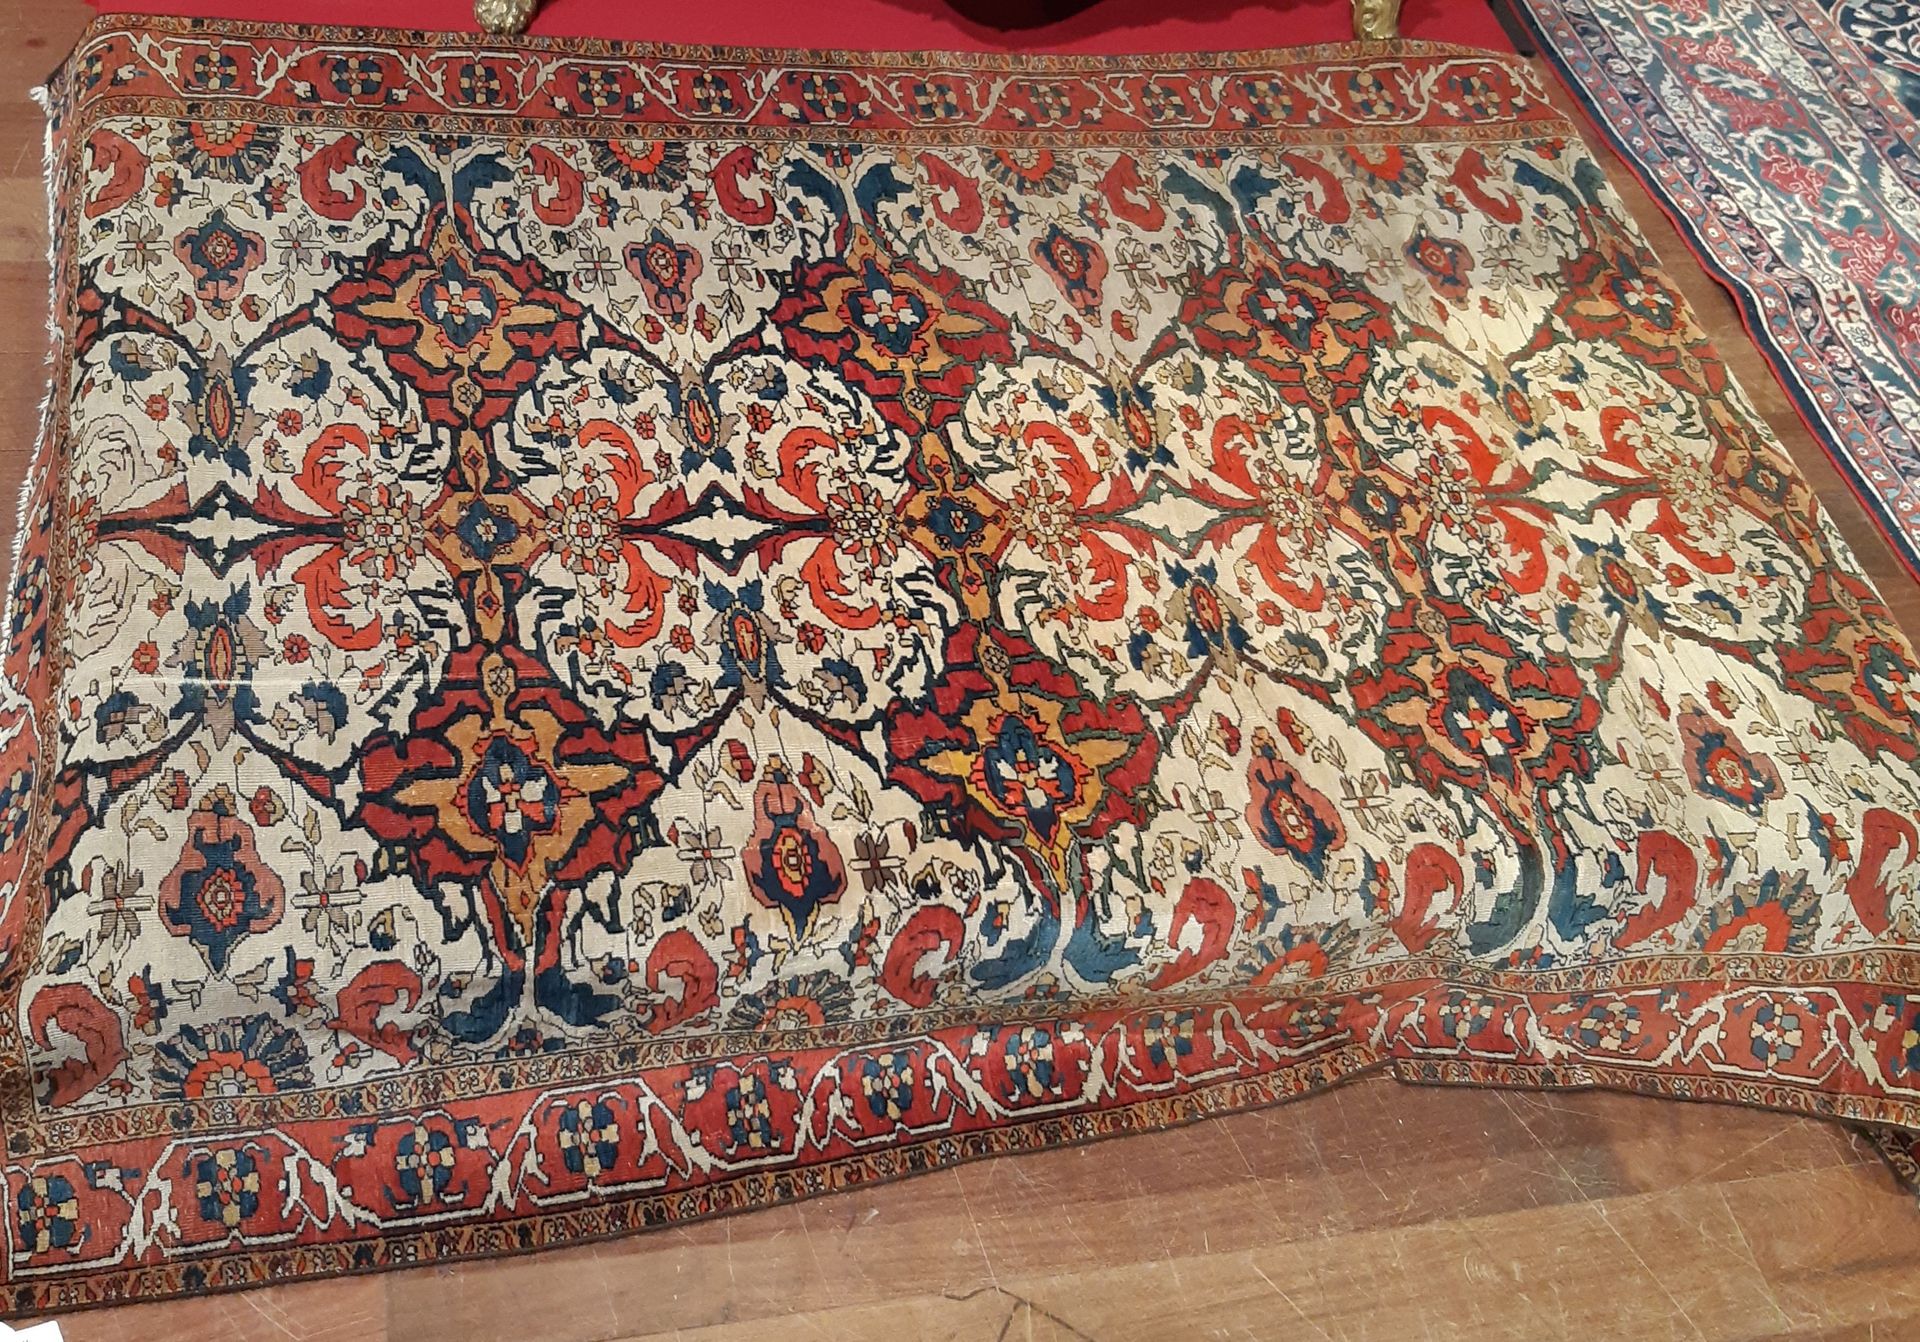 Null 波斯地毯上装饰着白色背景上的风格化树叶卷轴。两条辫子之间有红色背景的边框。
 （磨损，稍微缩短）。
长度 : 186 cm
宽度 : 130 cm